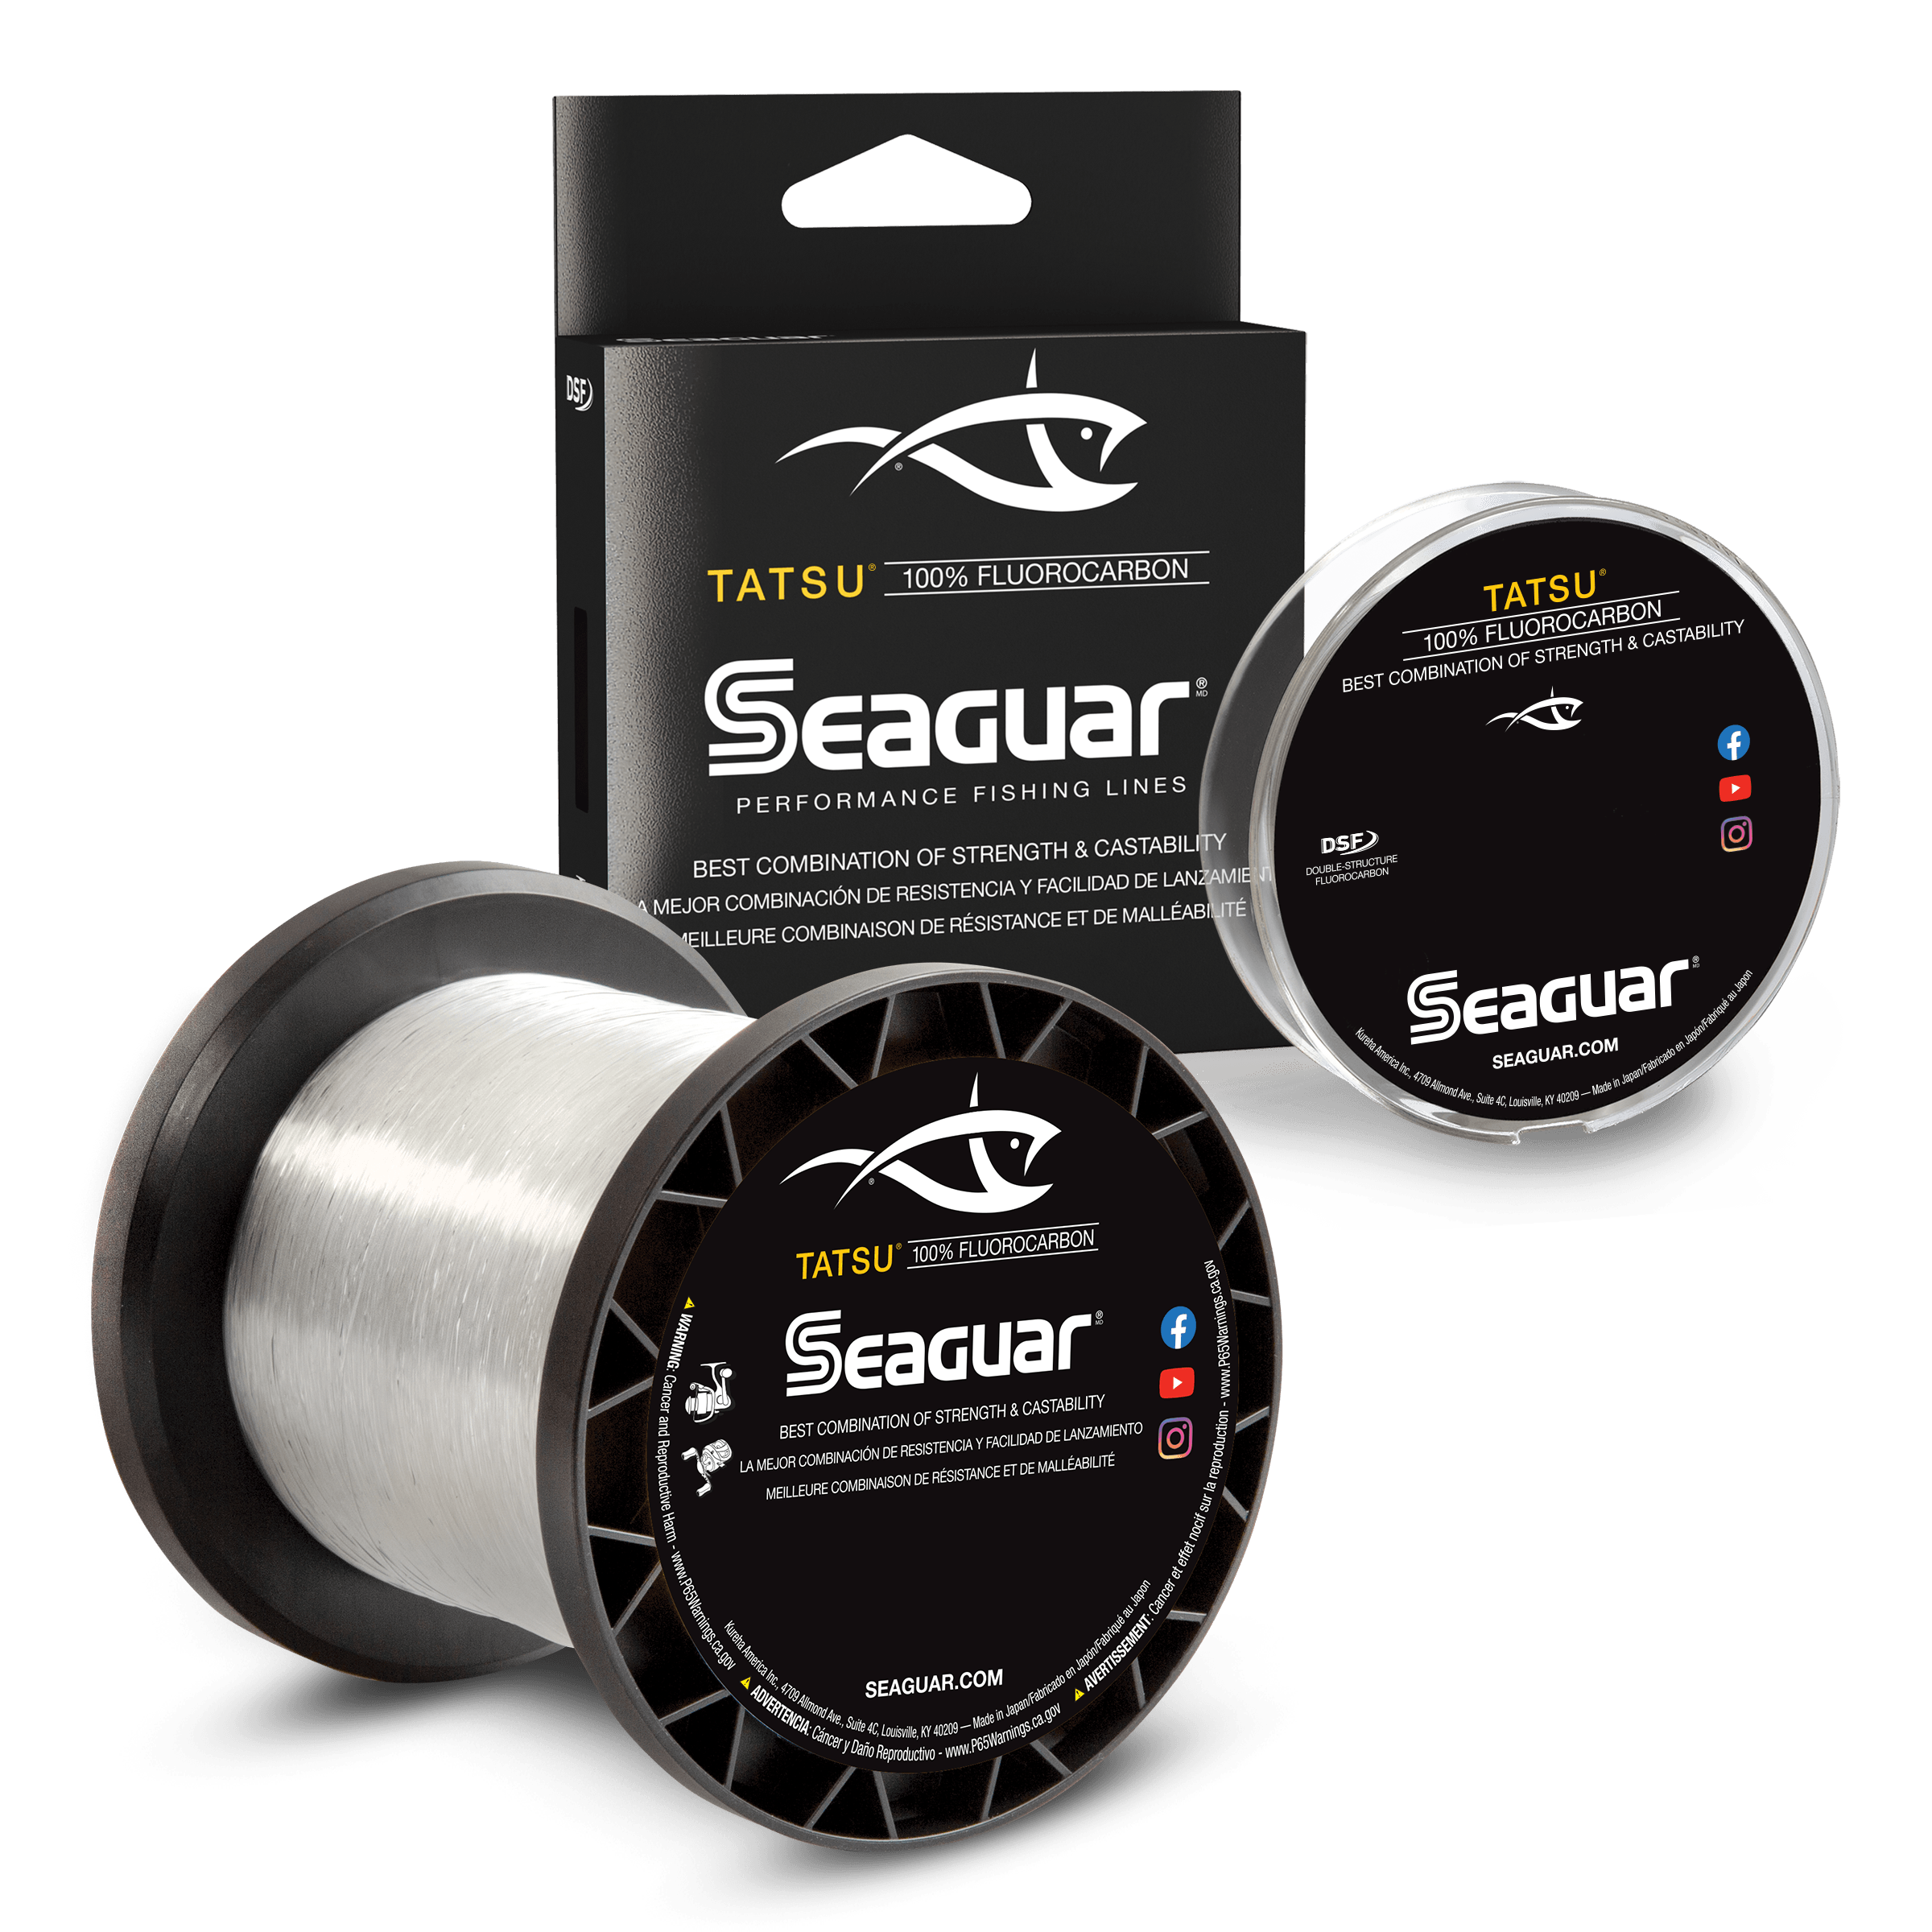 Seaguar InvizX Fluorocarbon Fishing Line 8 lb / 200yd